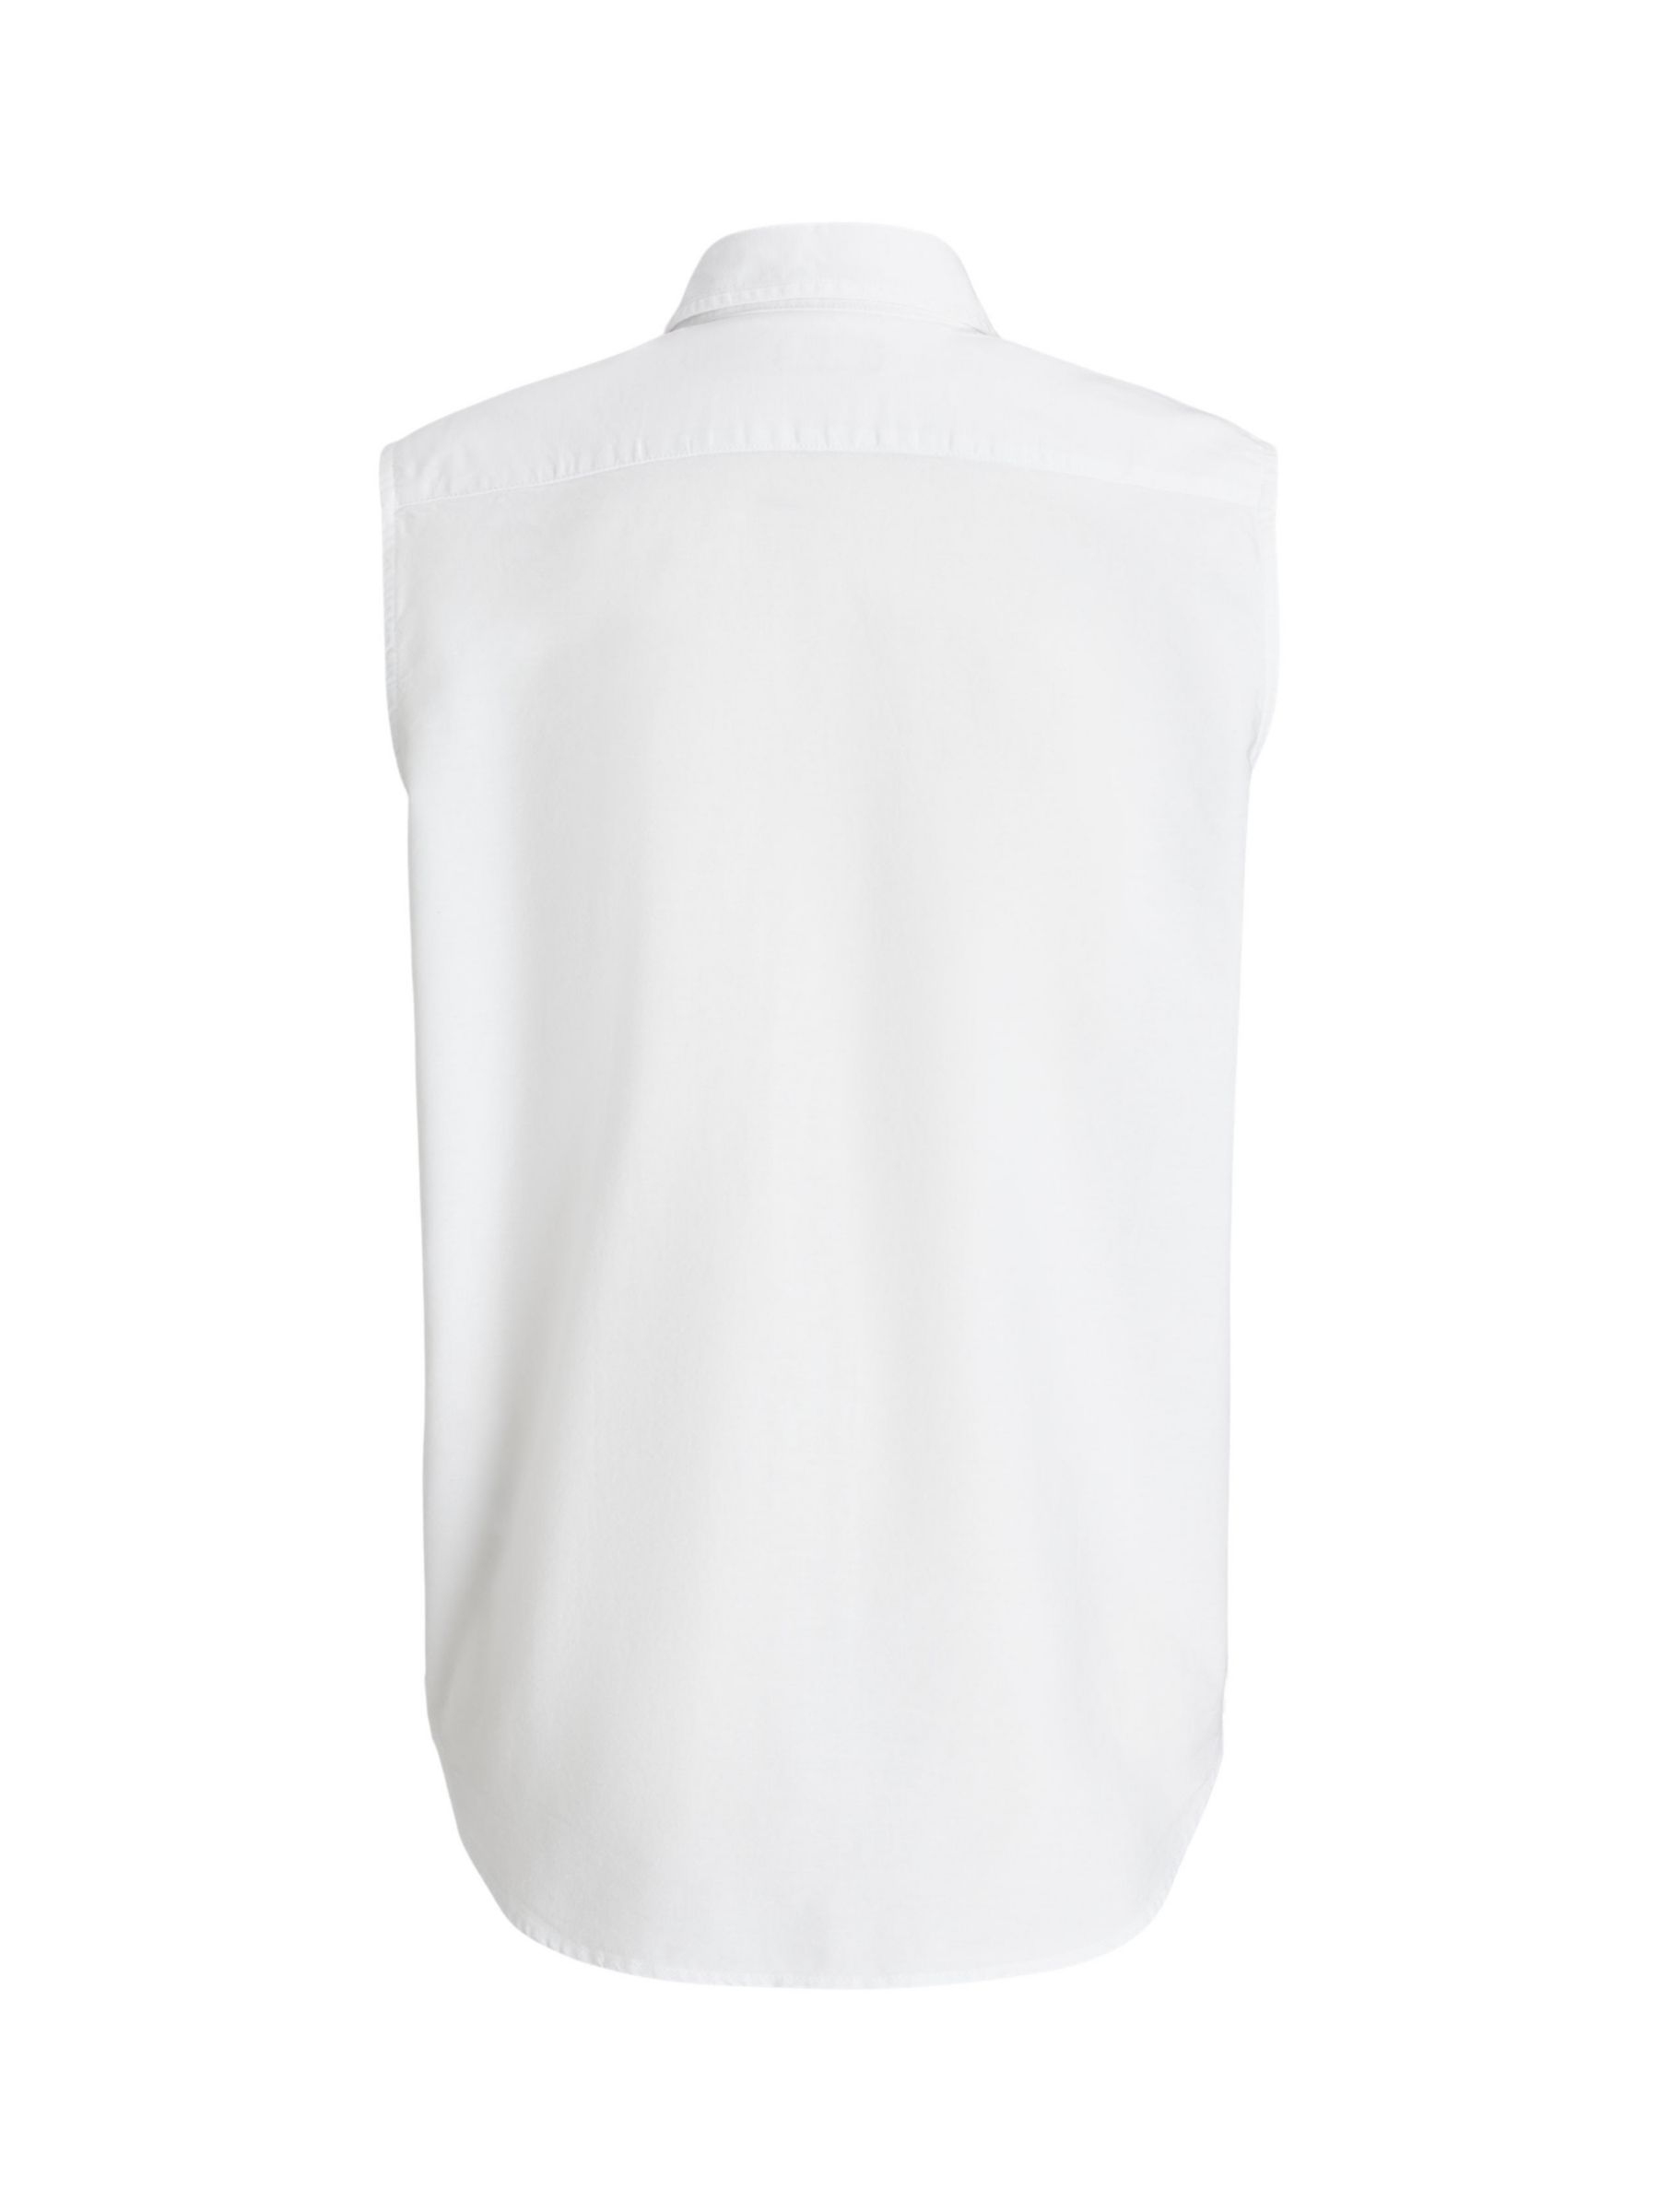 Polo Ralph Lauren Sleeveless Cotton Shirt, White, S